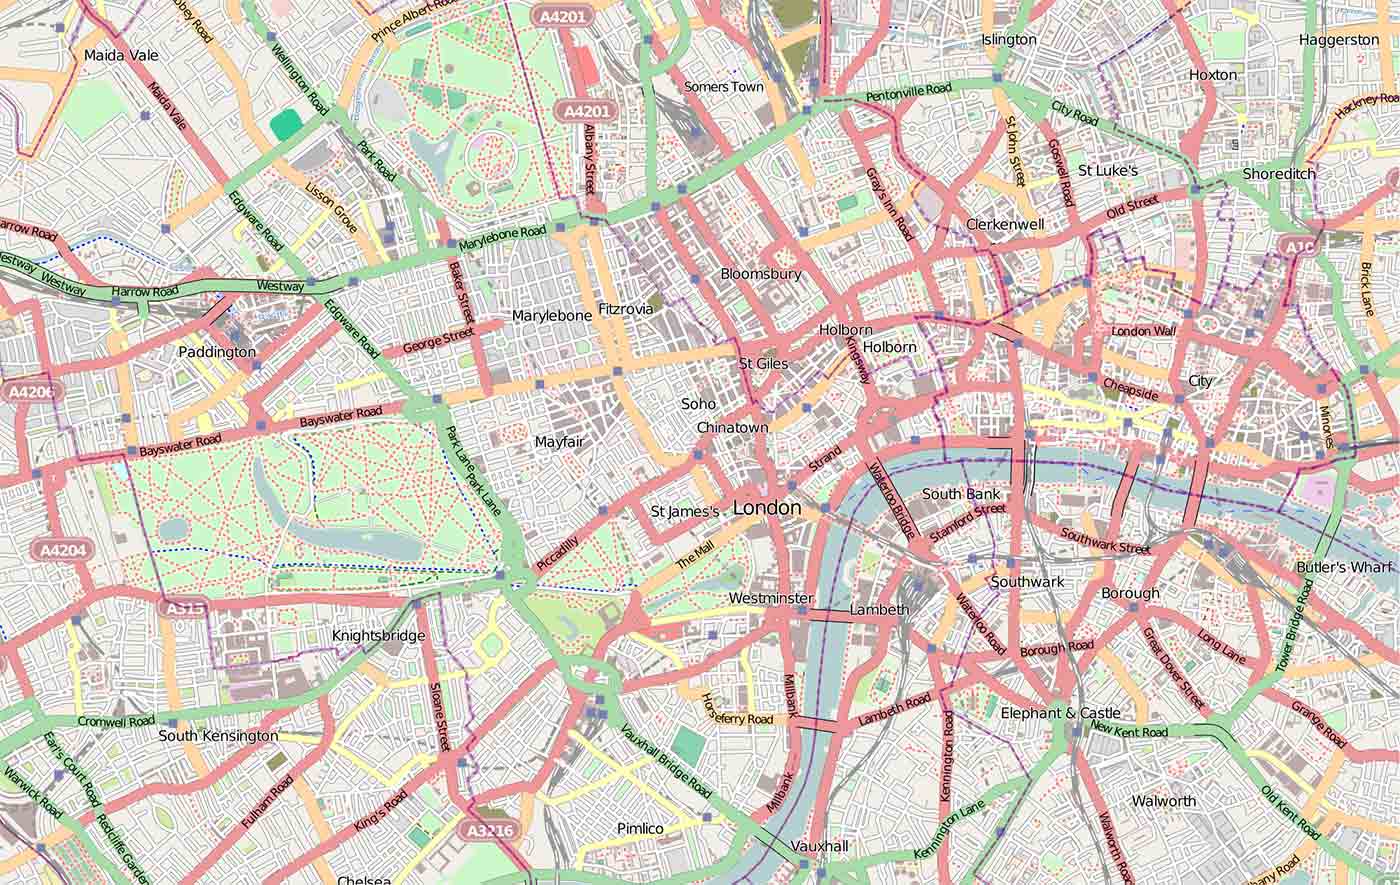 Open Street Map central London.